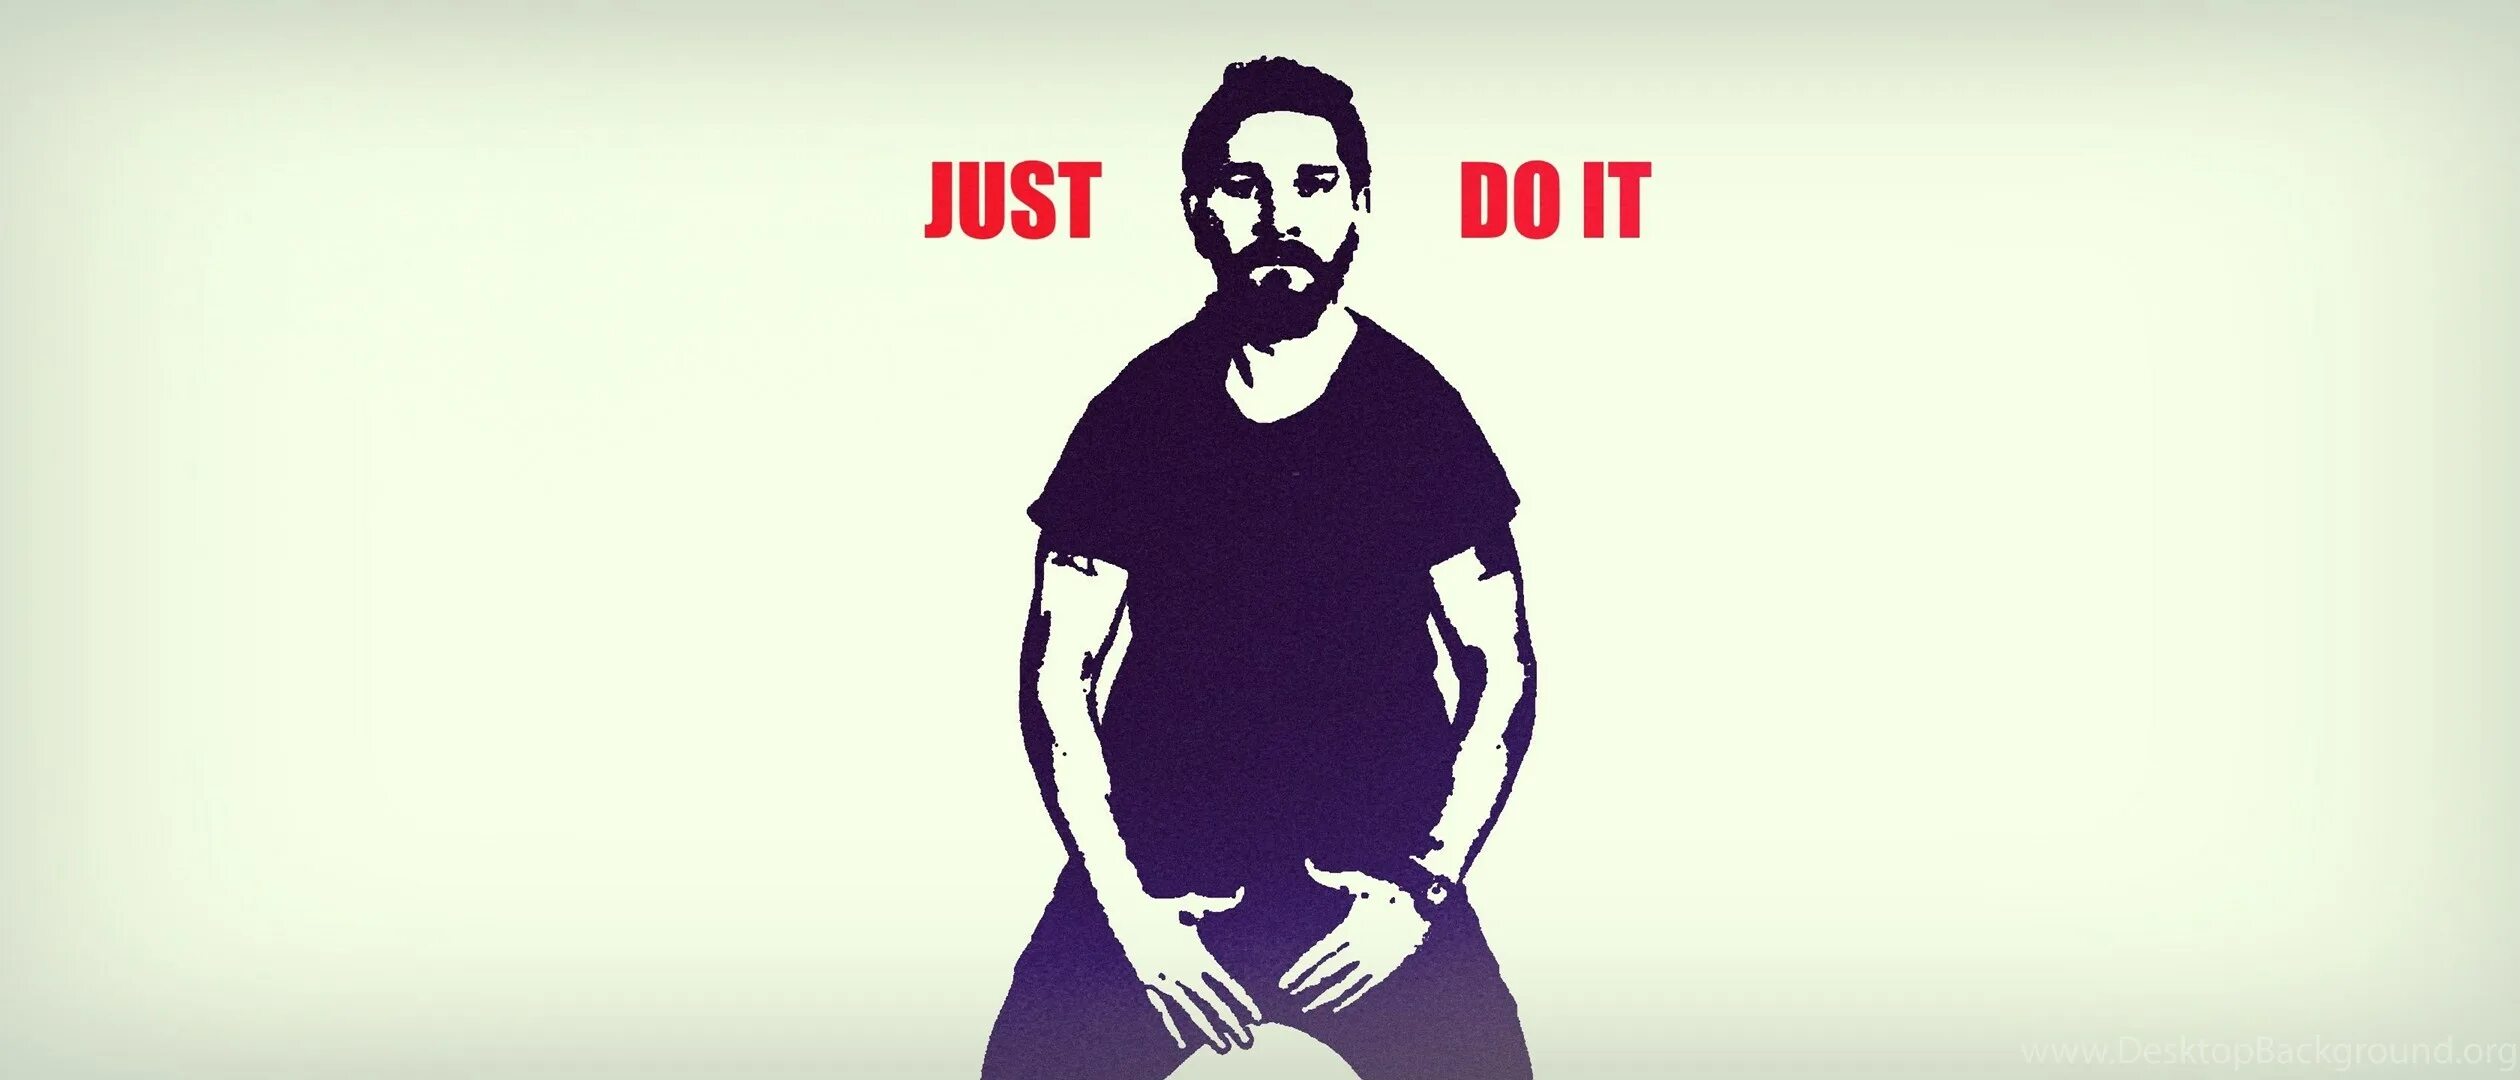 Just do it game. Just do it обои на рабочий стол. Just do it мотивация. Картина just do it.